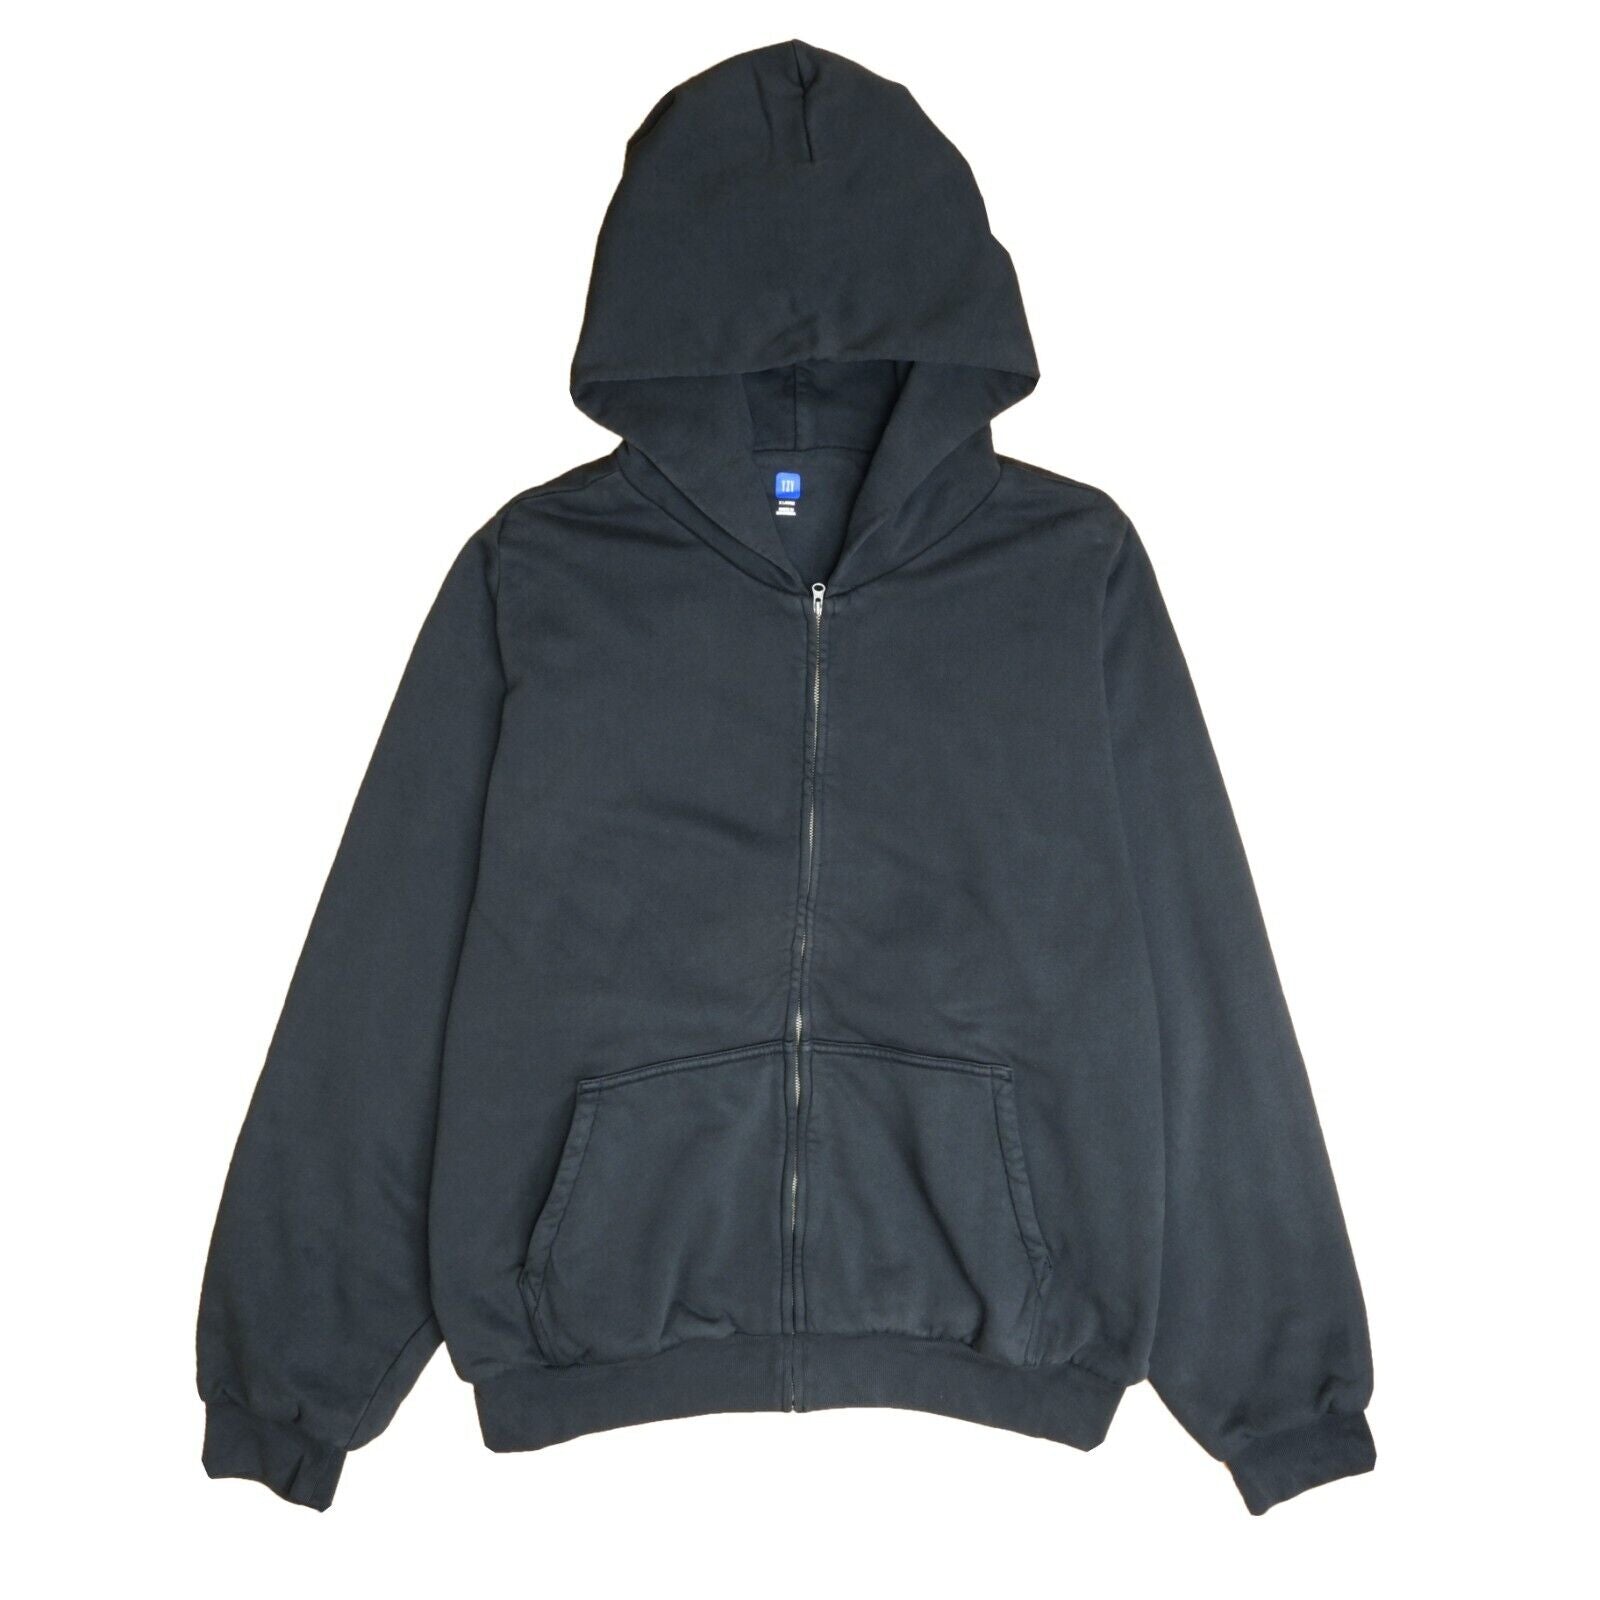 Yeezy Gap Unreleased Zip Sweatshirt Hoodie Size XL Black